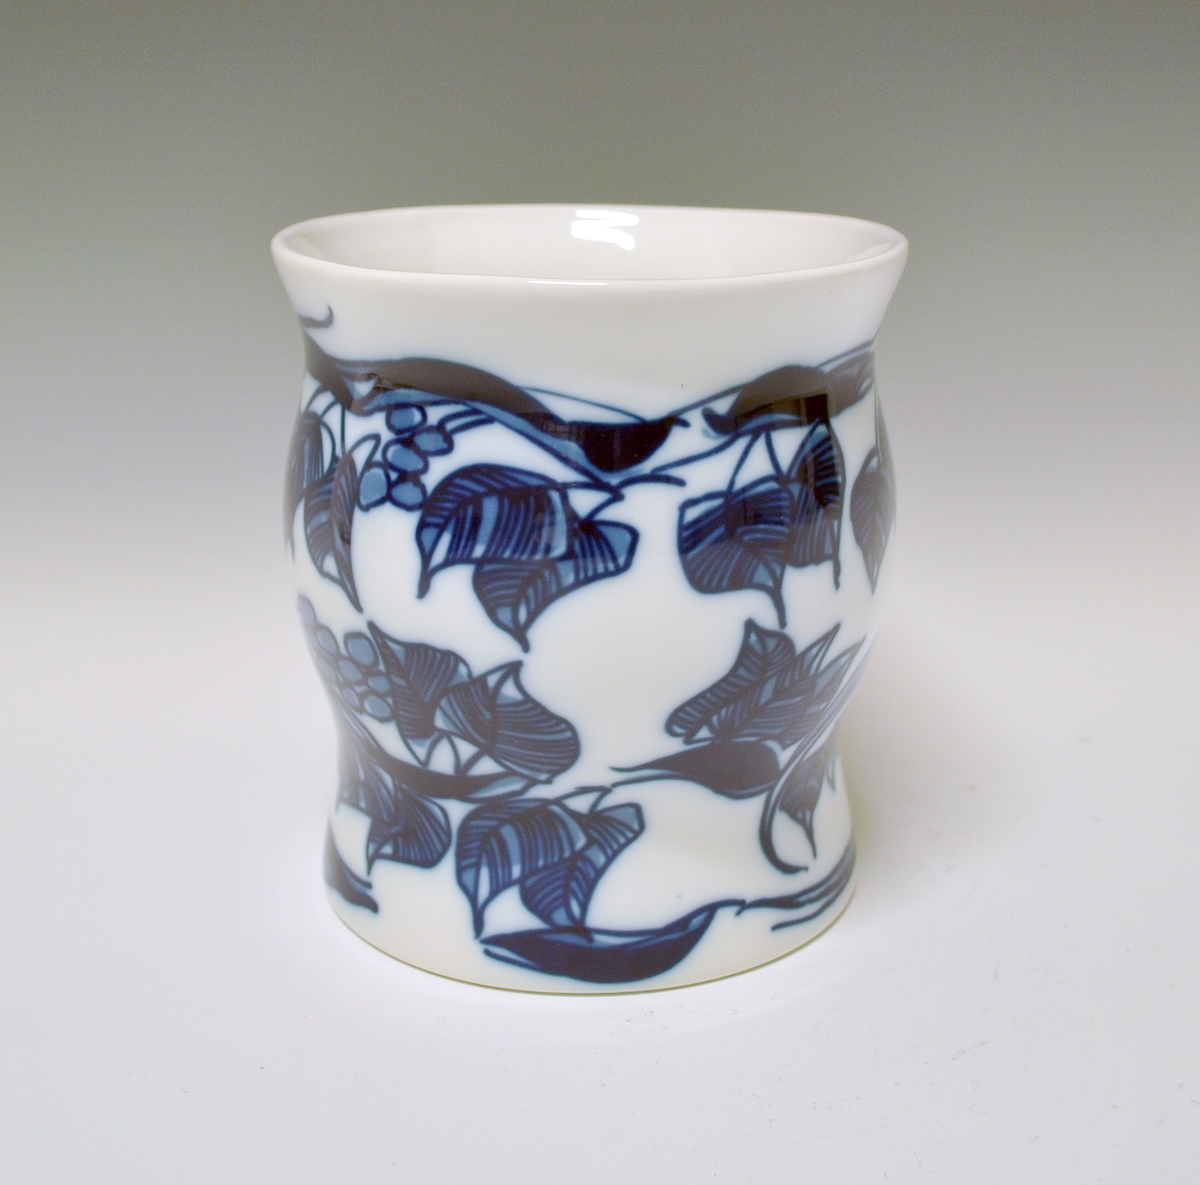 Vase i porselen. Bølget form, sirkelformet fot og oval åpning på toppen. Hvit glasur. Blå underglasurdekor: Grener med blader og drueklaser.
Kunstner: Unni M. Johnsen.